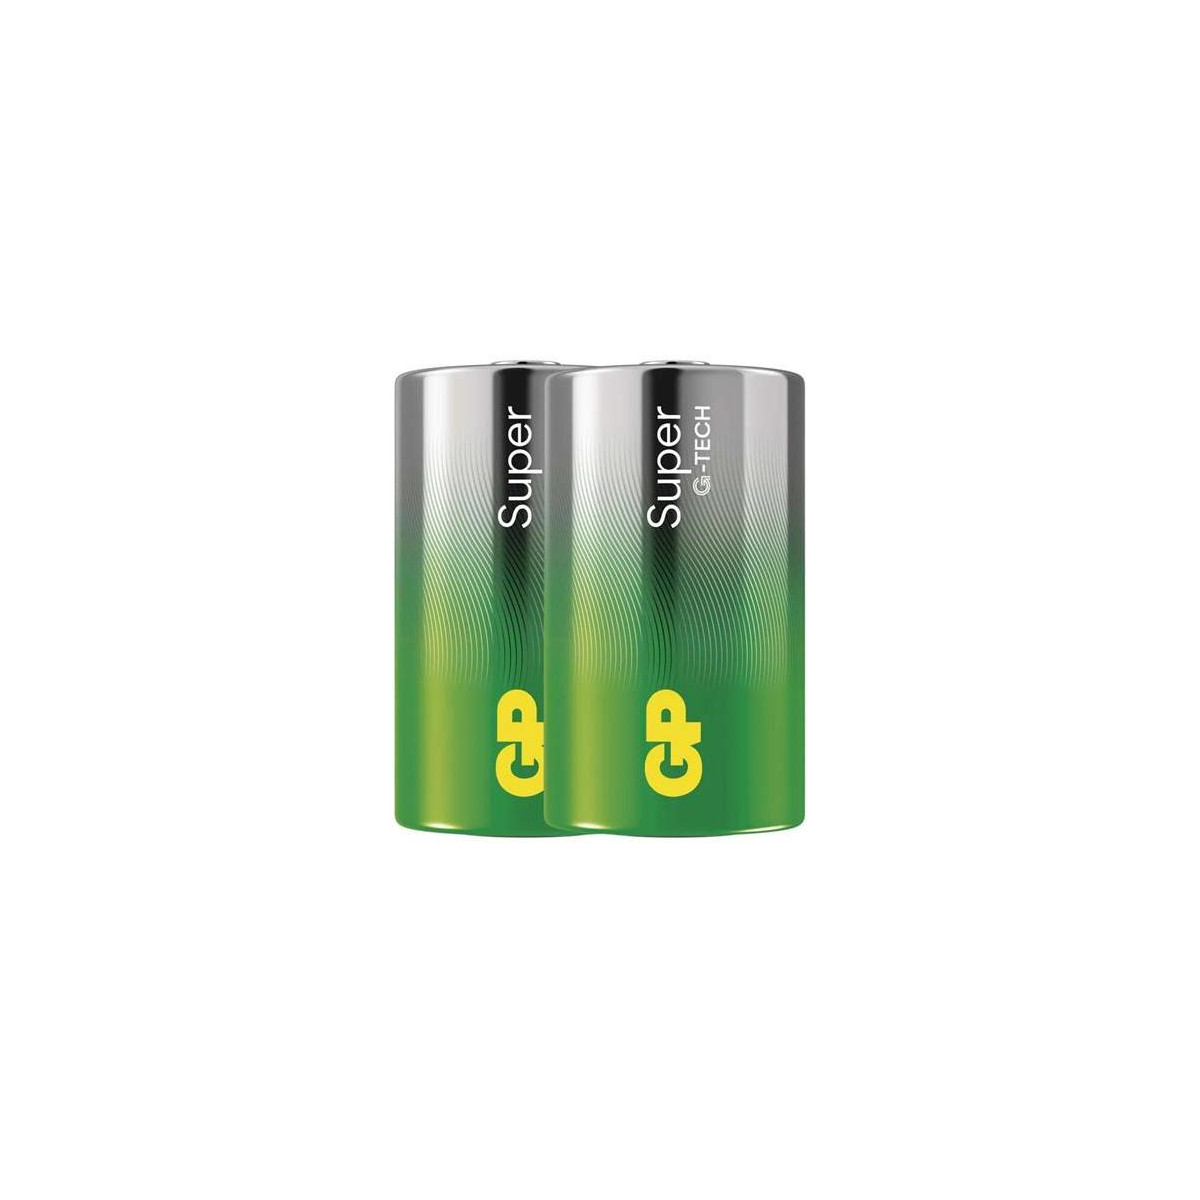 More about Baterie D (R20) alkalická GP Super 2ks (fólie)